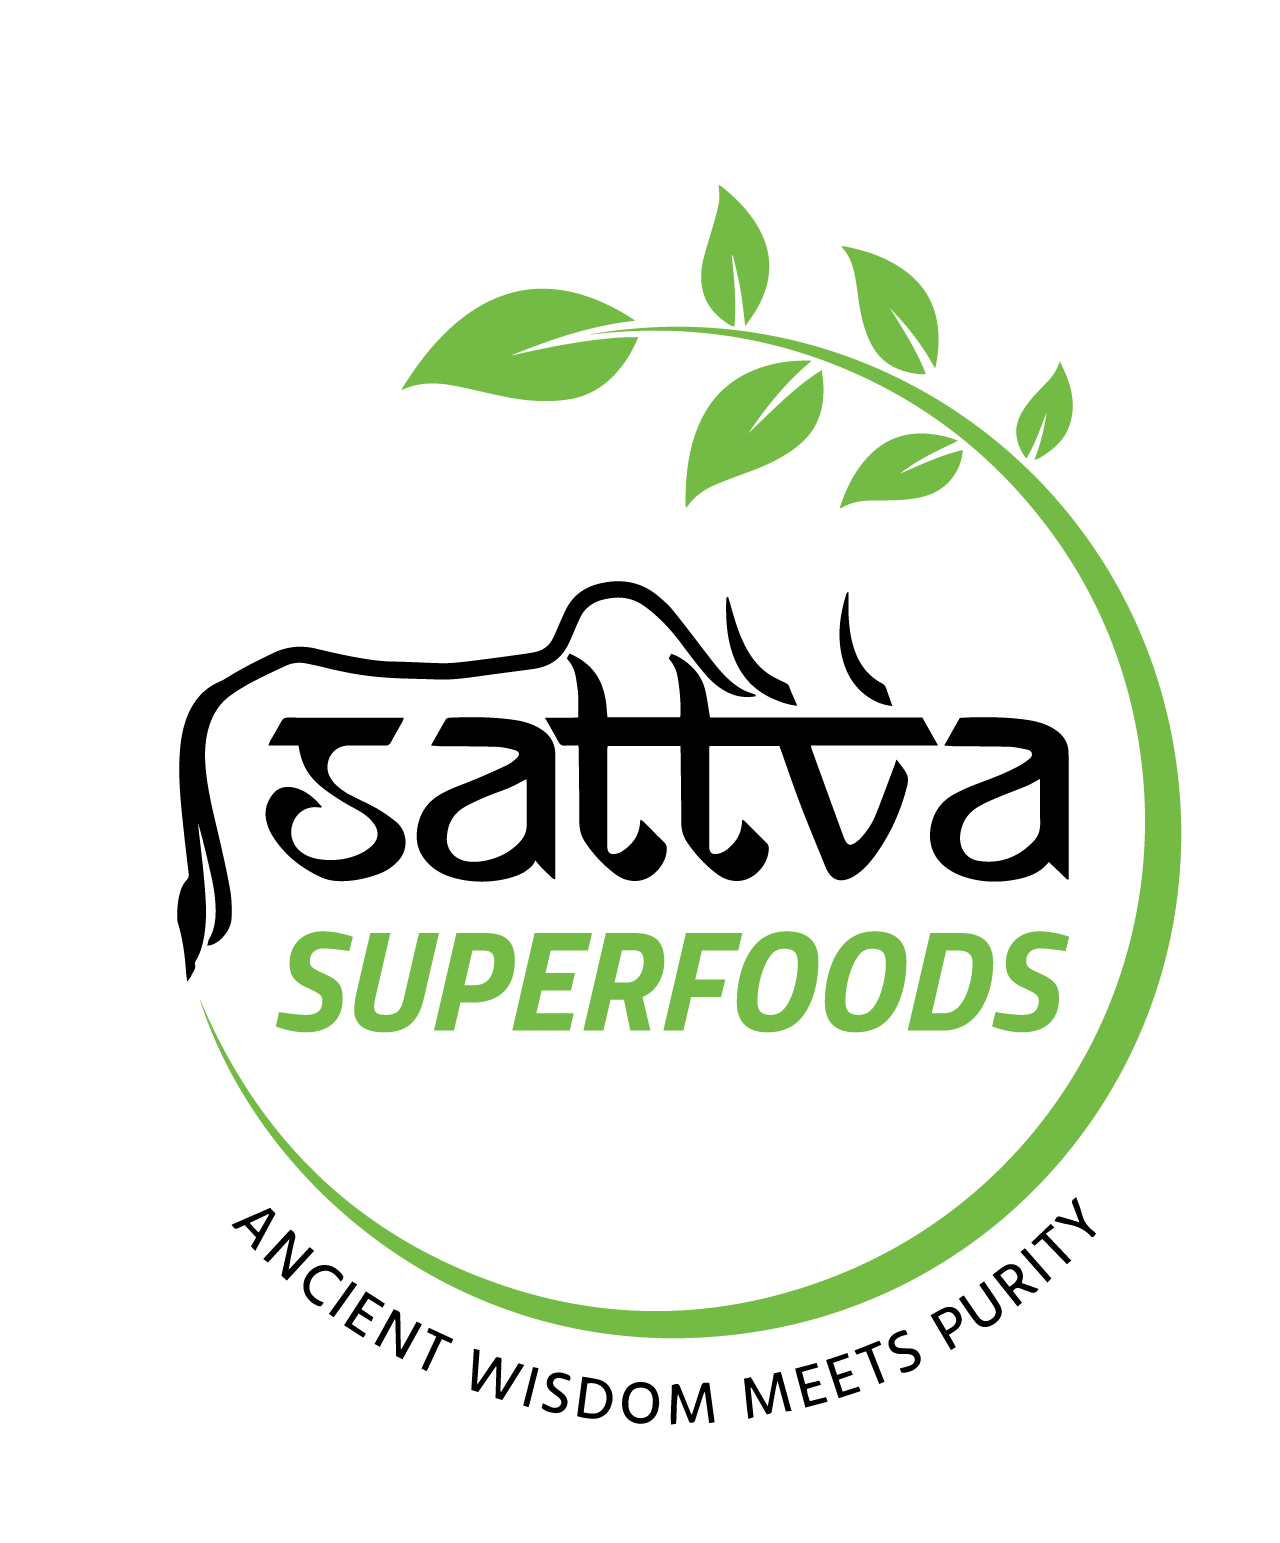 Sattva Super Foods